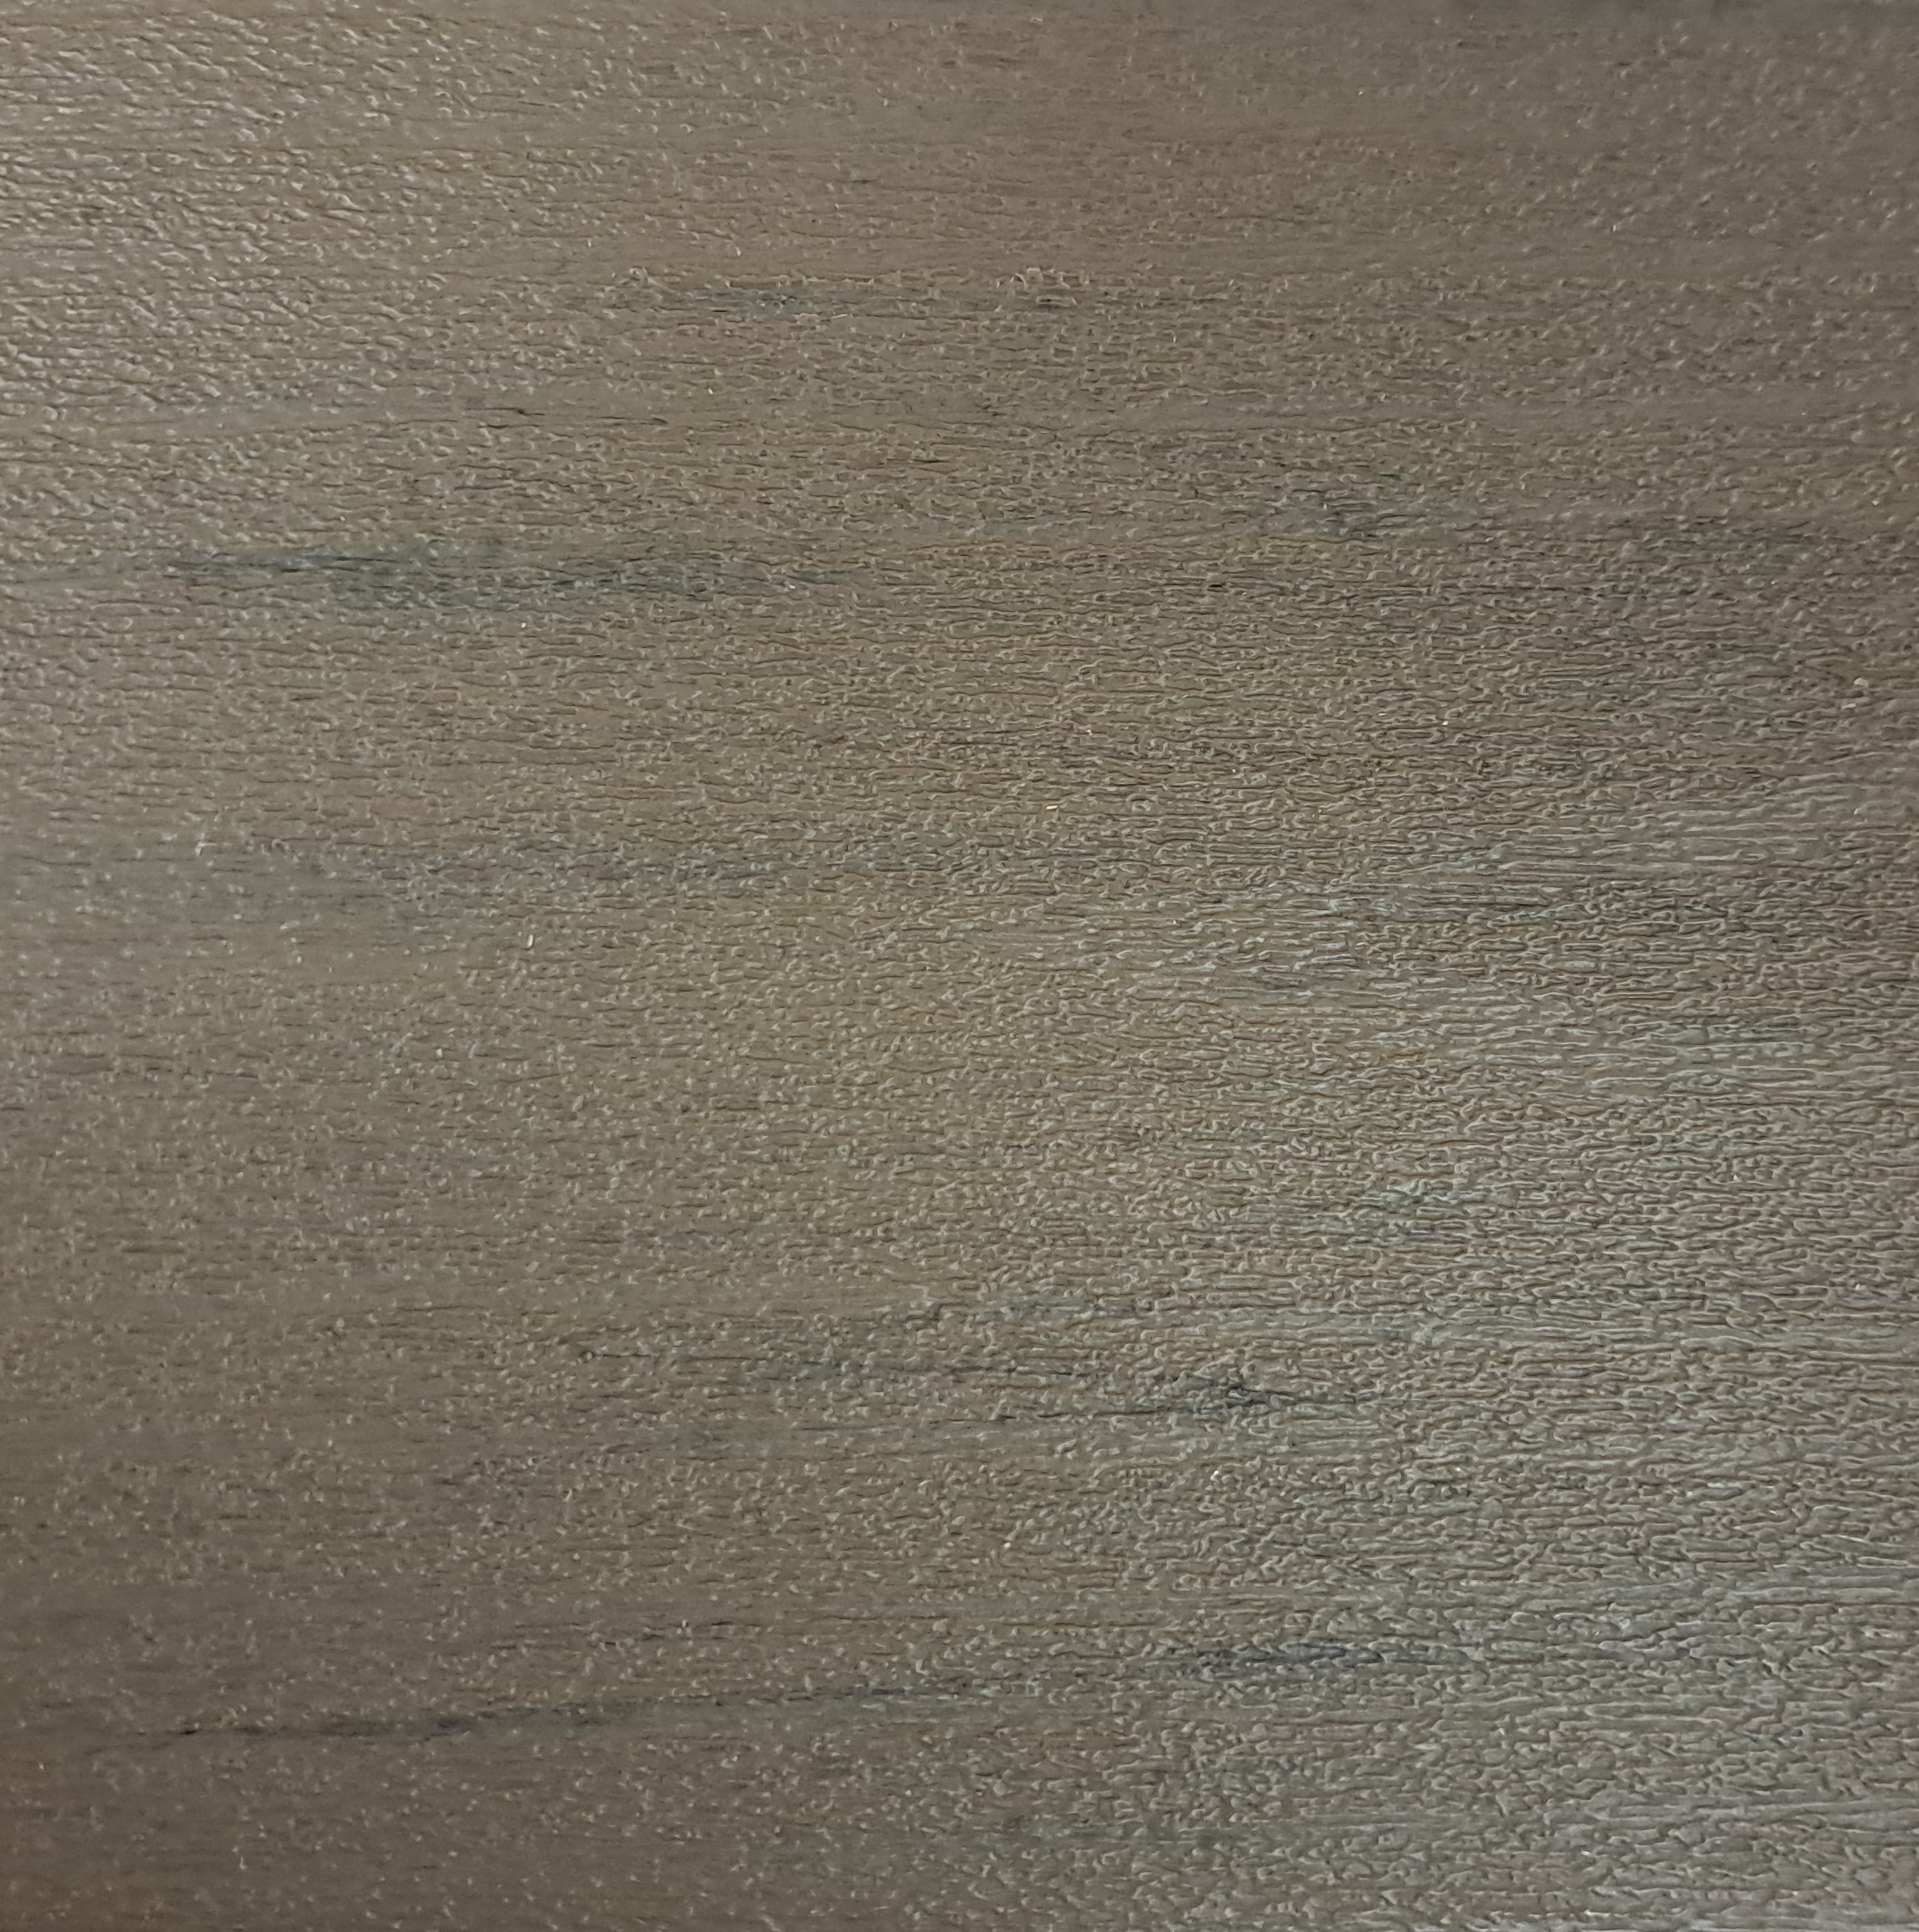 Texture of Timbertech Silver Maple Decking